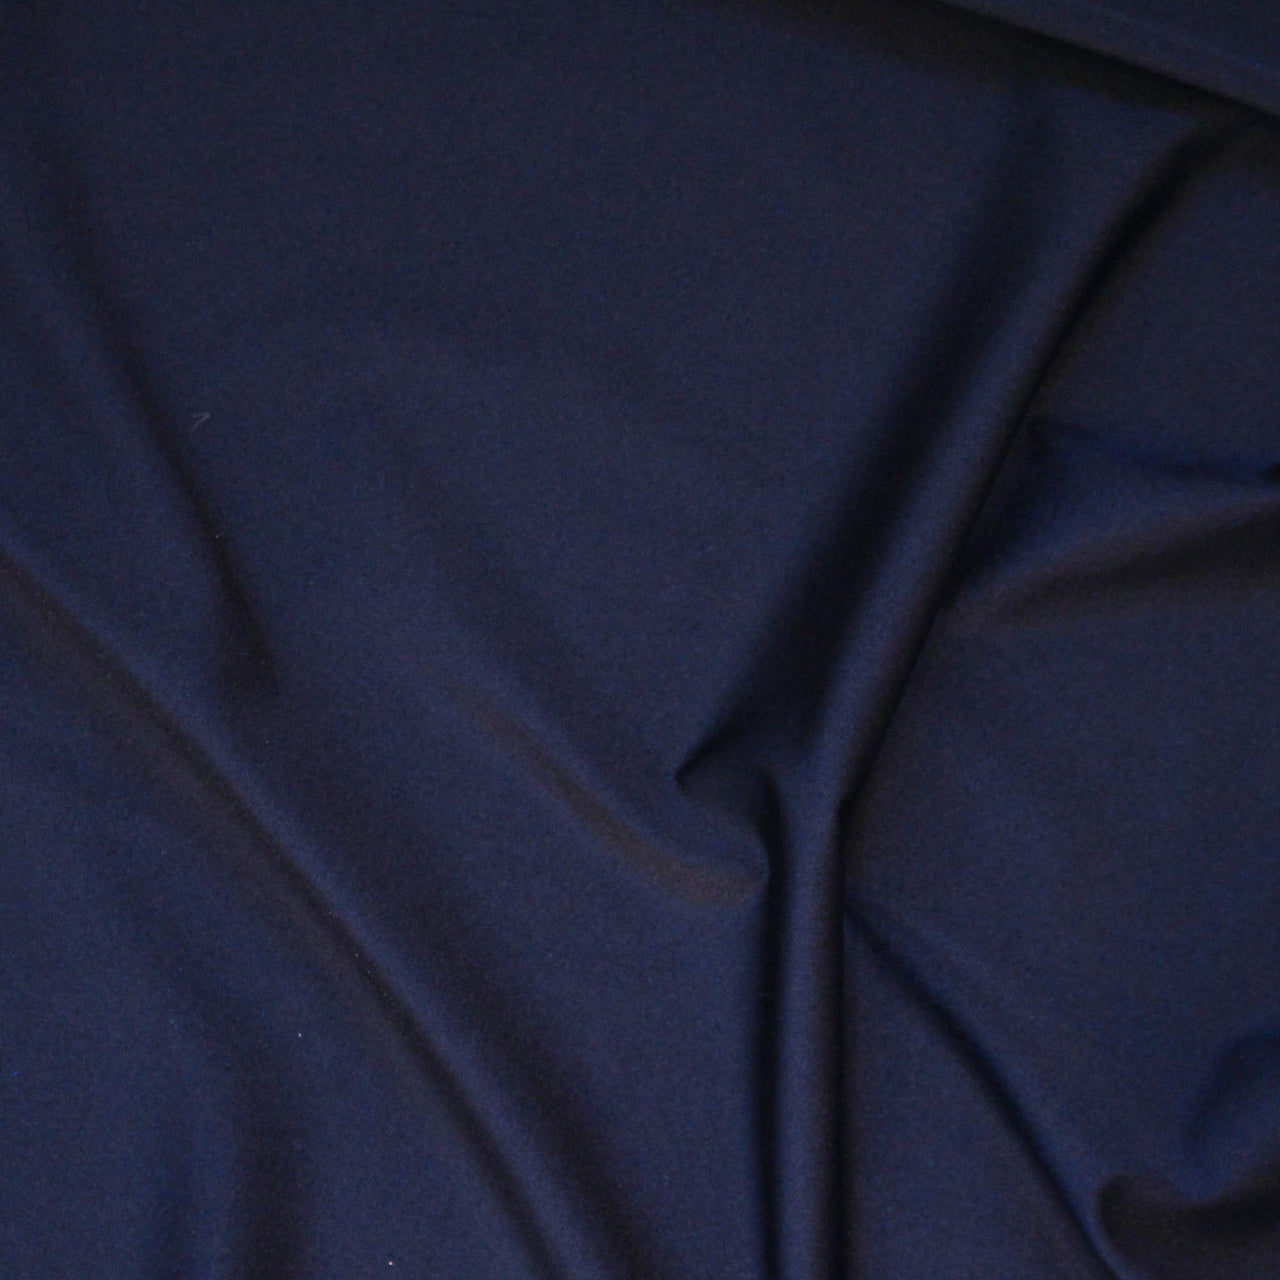 Navy Blue - Nylon Spandex Fabric - 4 Way All Way Stretch Superior Quality - Leotards, Dancewear